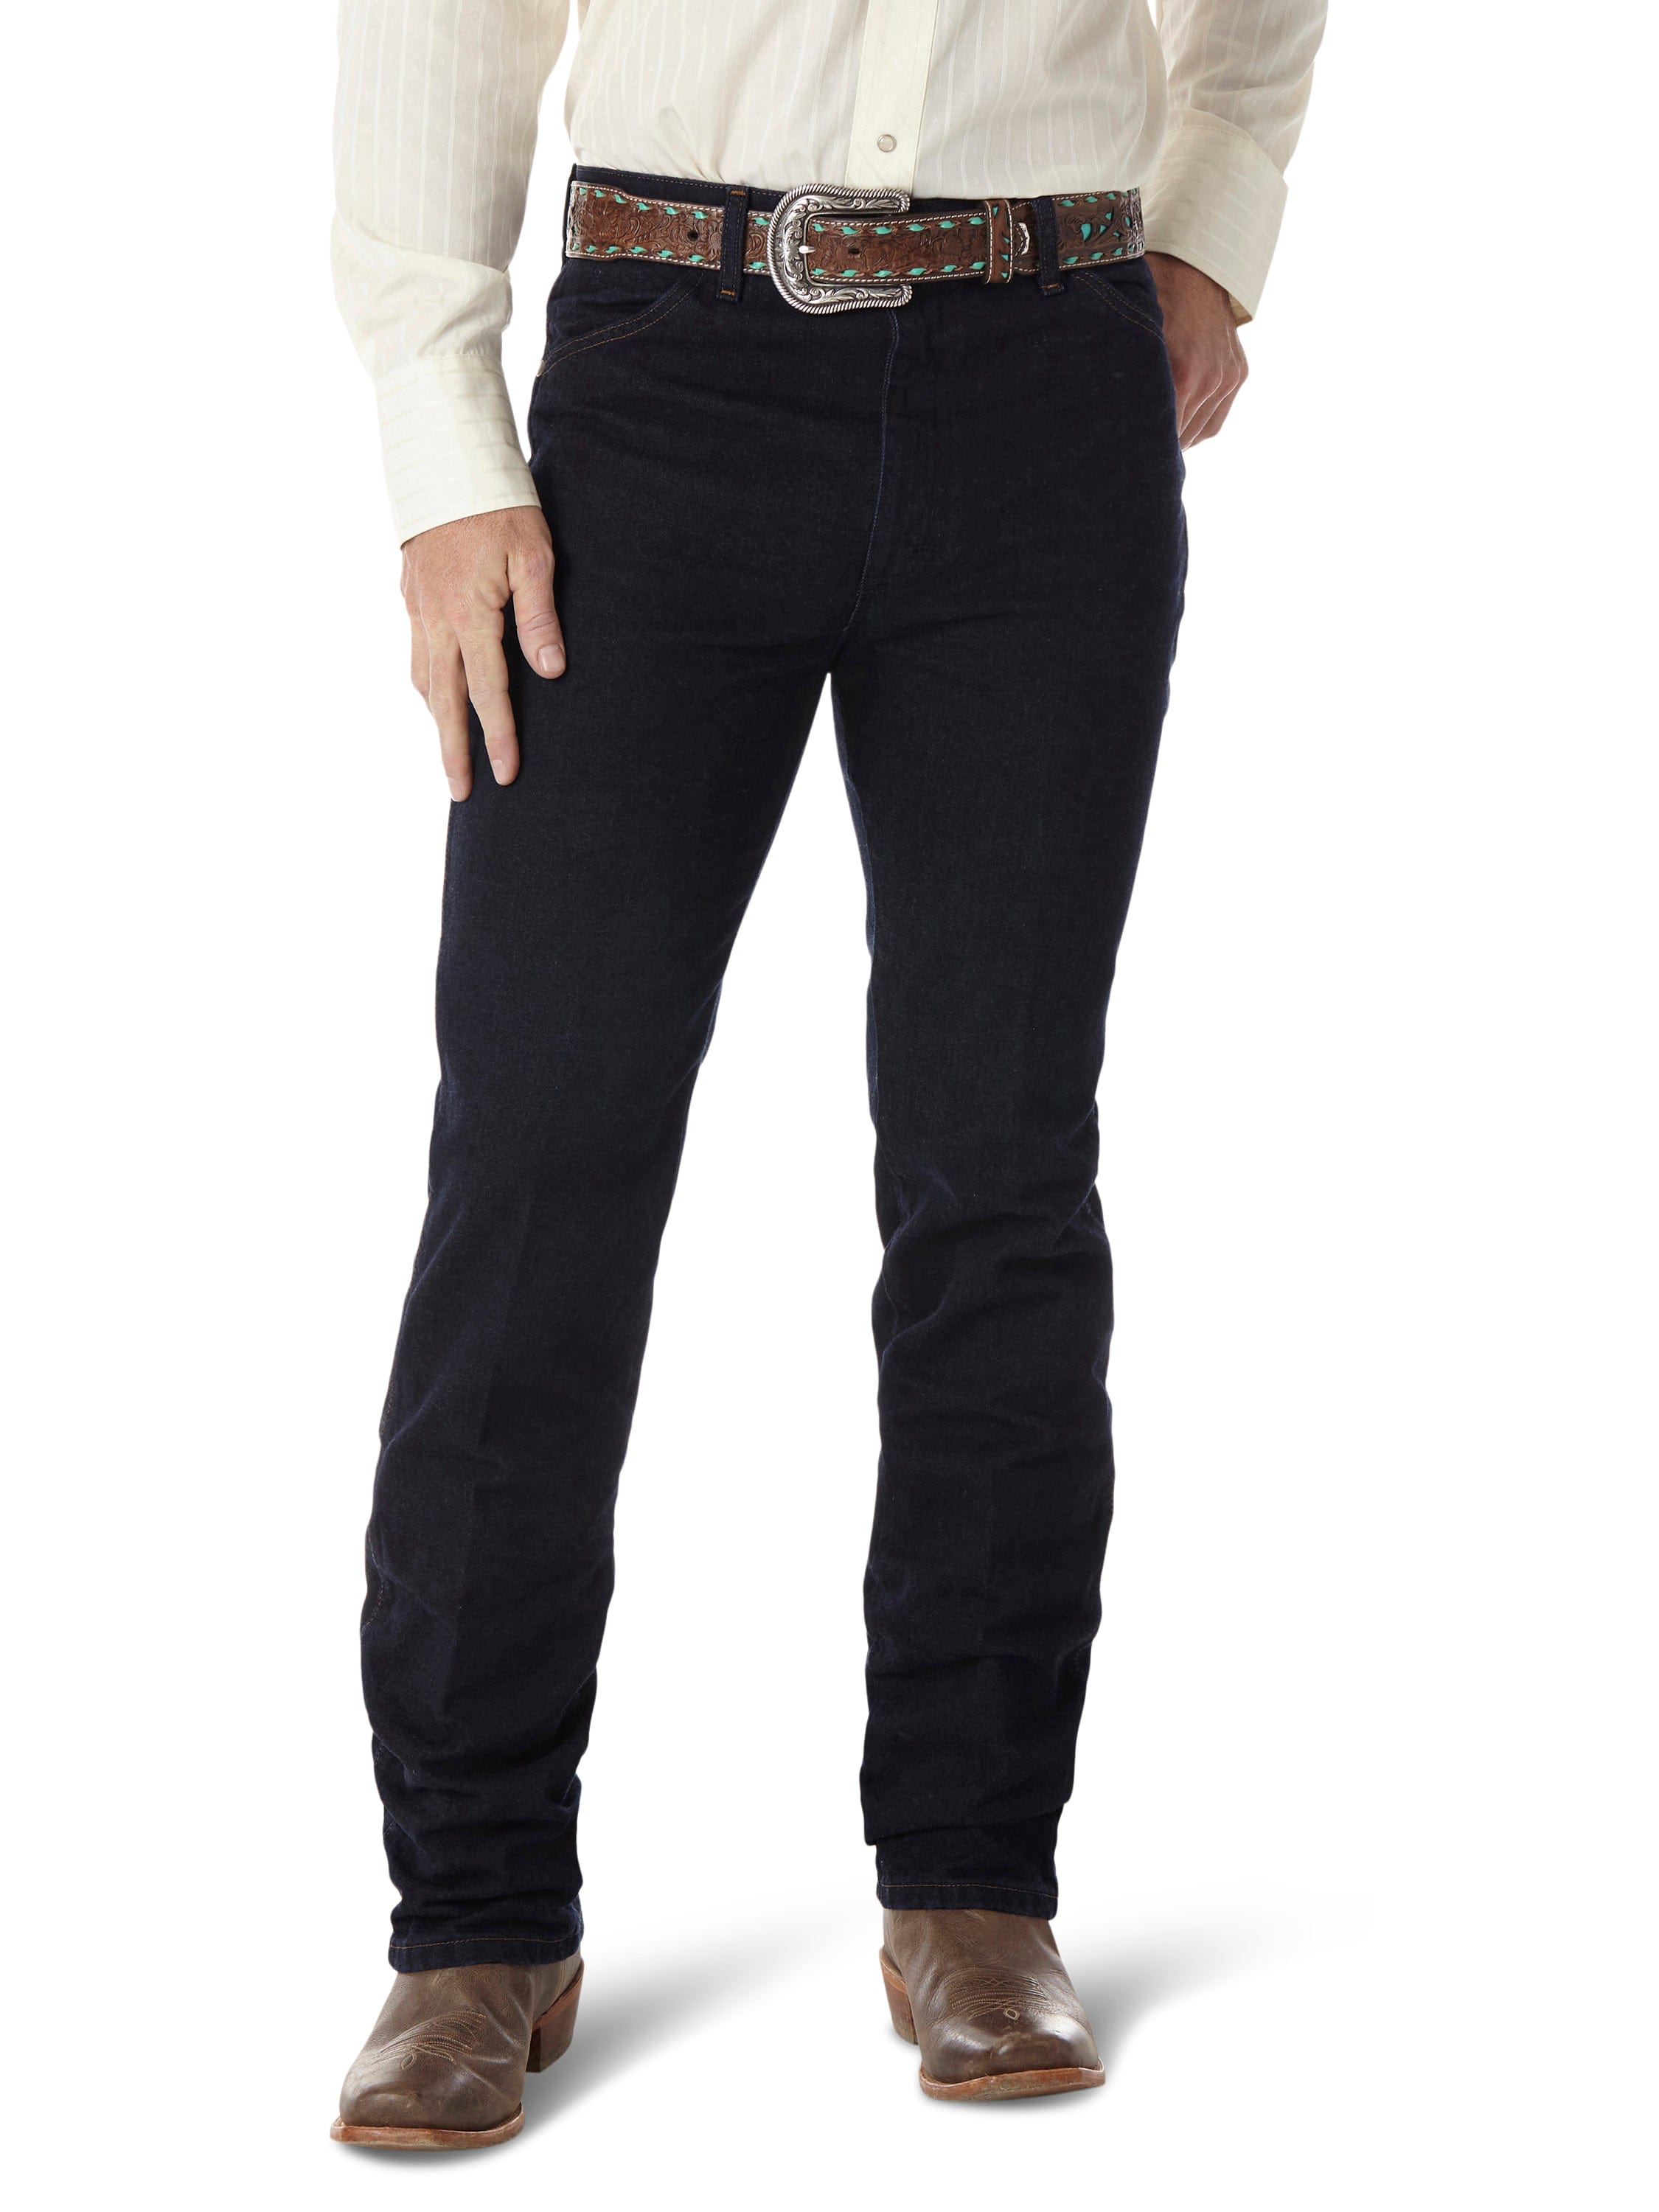 Wrangler Men's Cowboy Cut Silver Edition Dark Denim Slim Fit Jeans 933 - Western Wear,